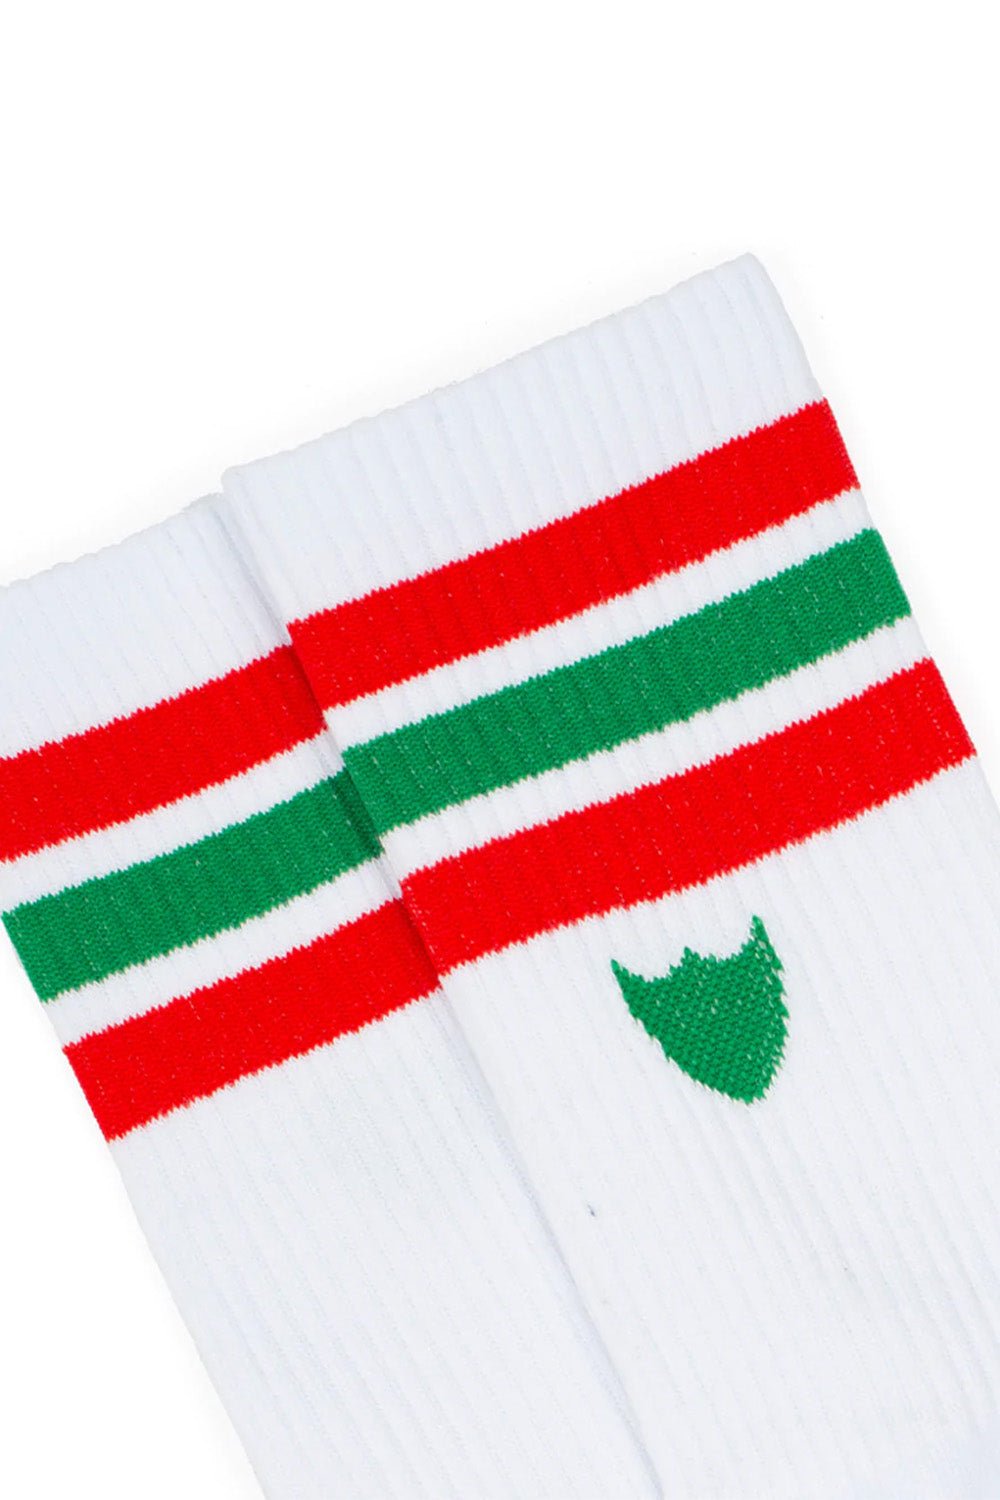 SHIELD FLAG MAN SOCKS Signature man socks with Hollywood Trading Co script logo. 85% Cotton 10% Polyamide 5% Elastane. Made in Italy HTC LOS ANGELES